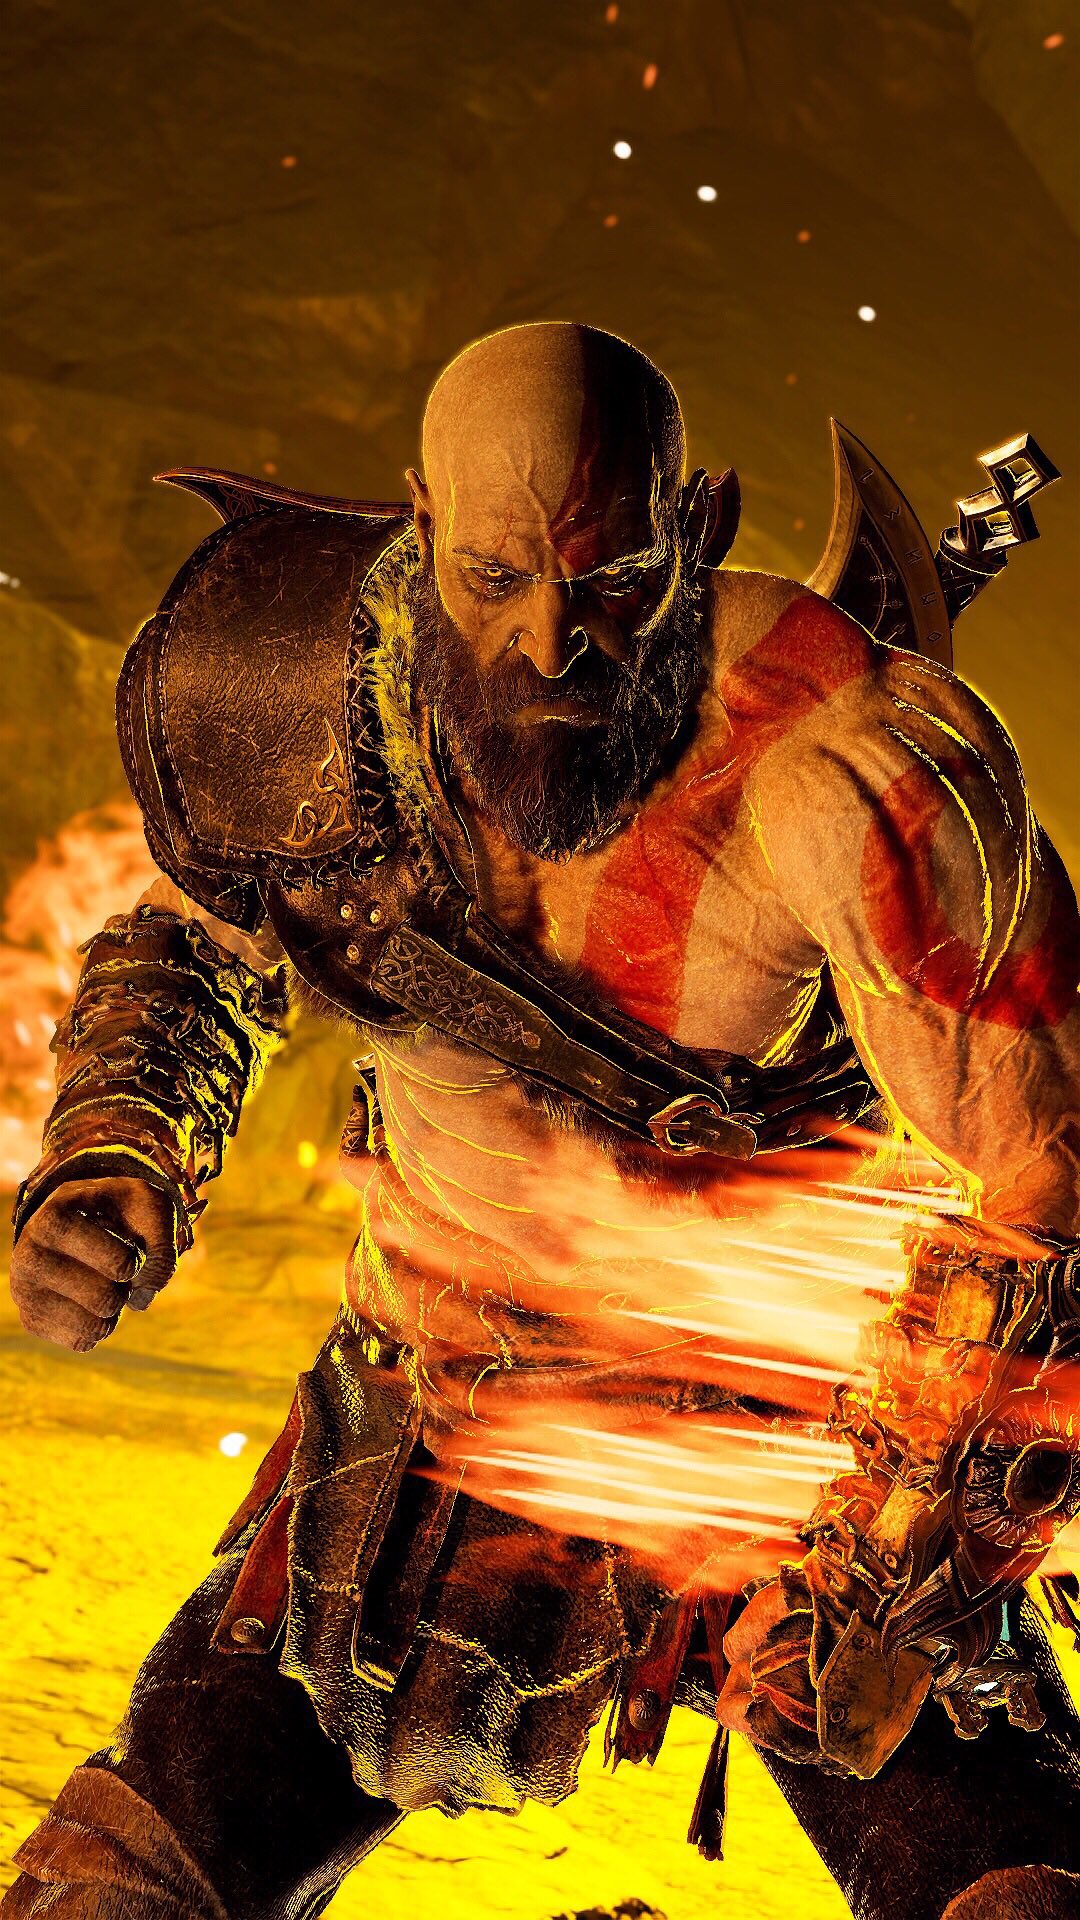 Game On Focus Spartan Rage Kratos Is A Scary Kratos Godofwar Kratos Psshare Psblog T Co Qz5lrxerdq Twitter